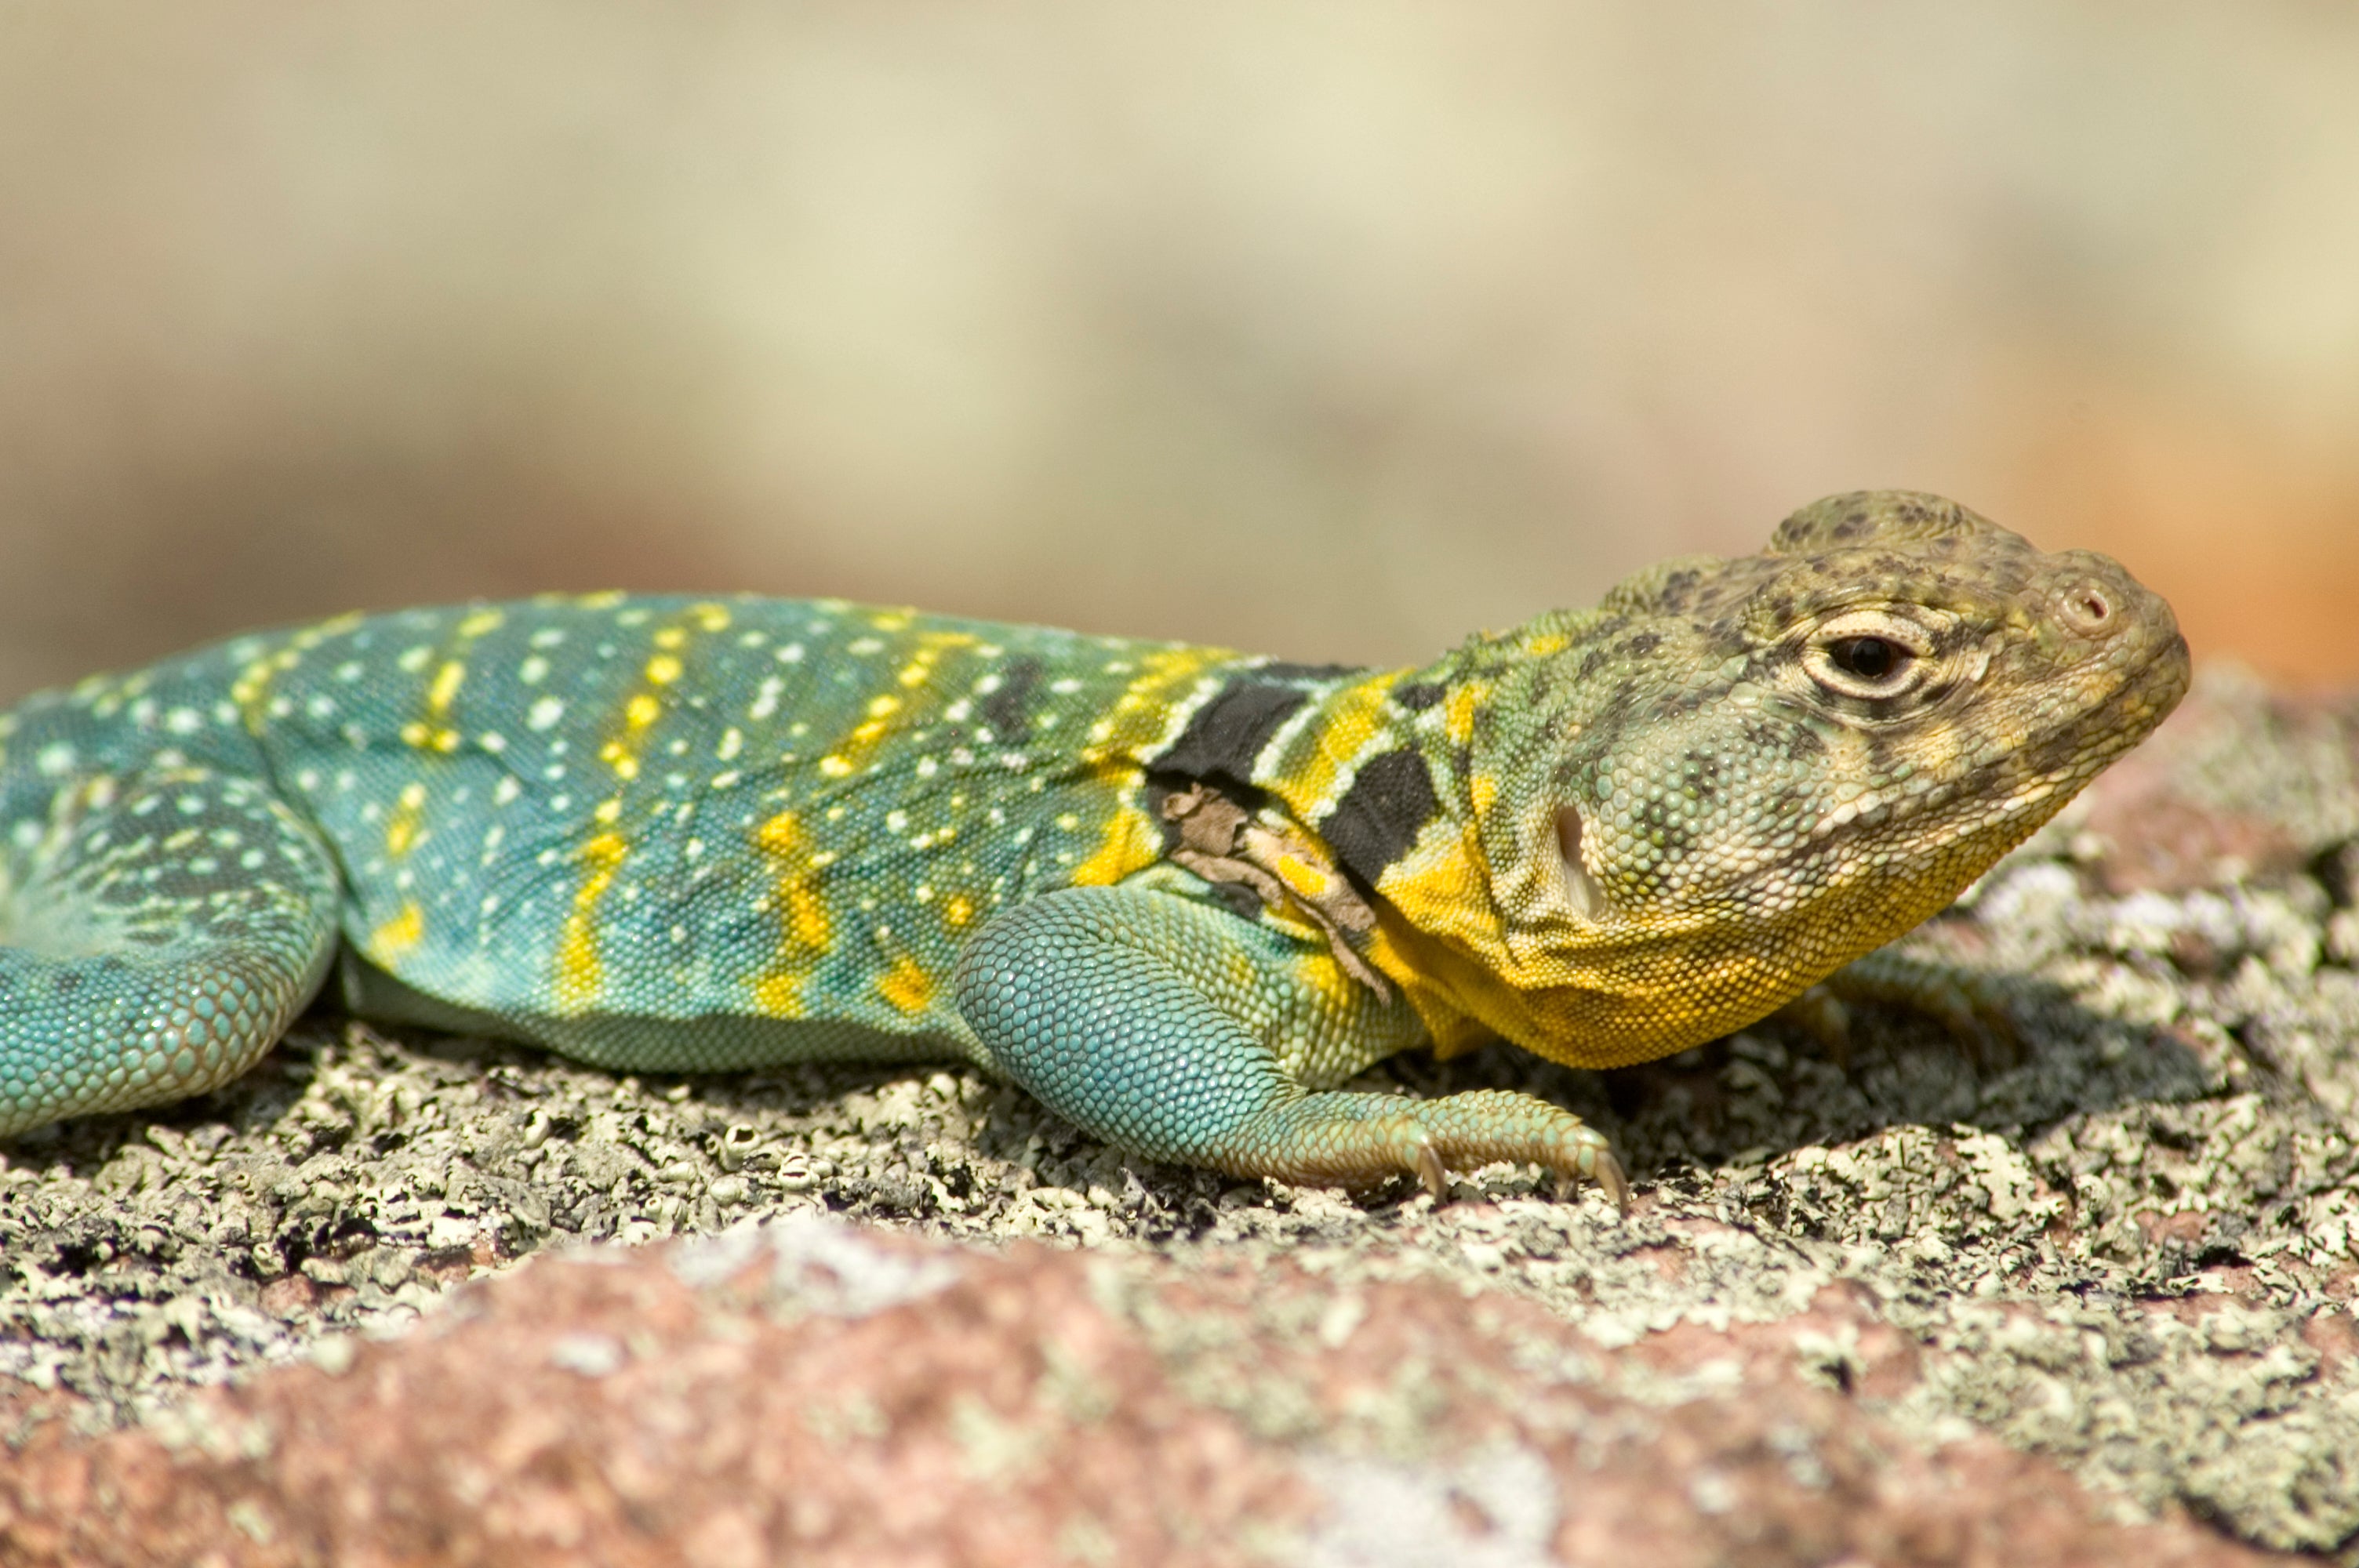 image of Eastern Collared Lizard